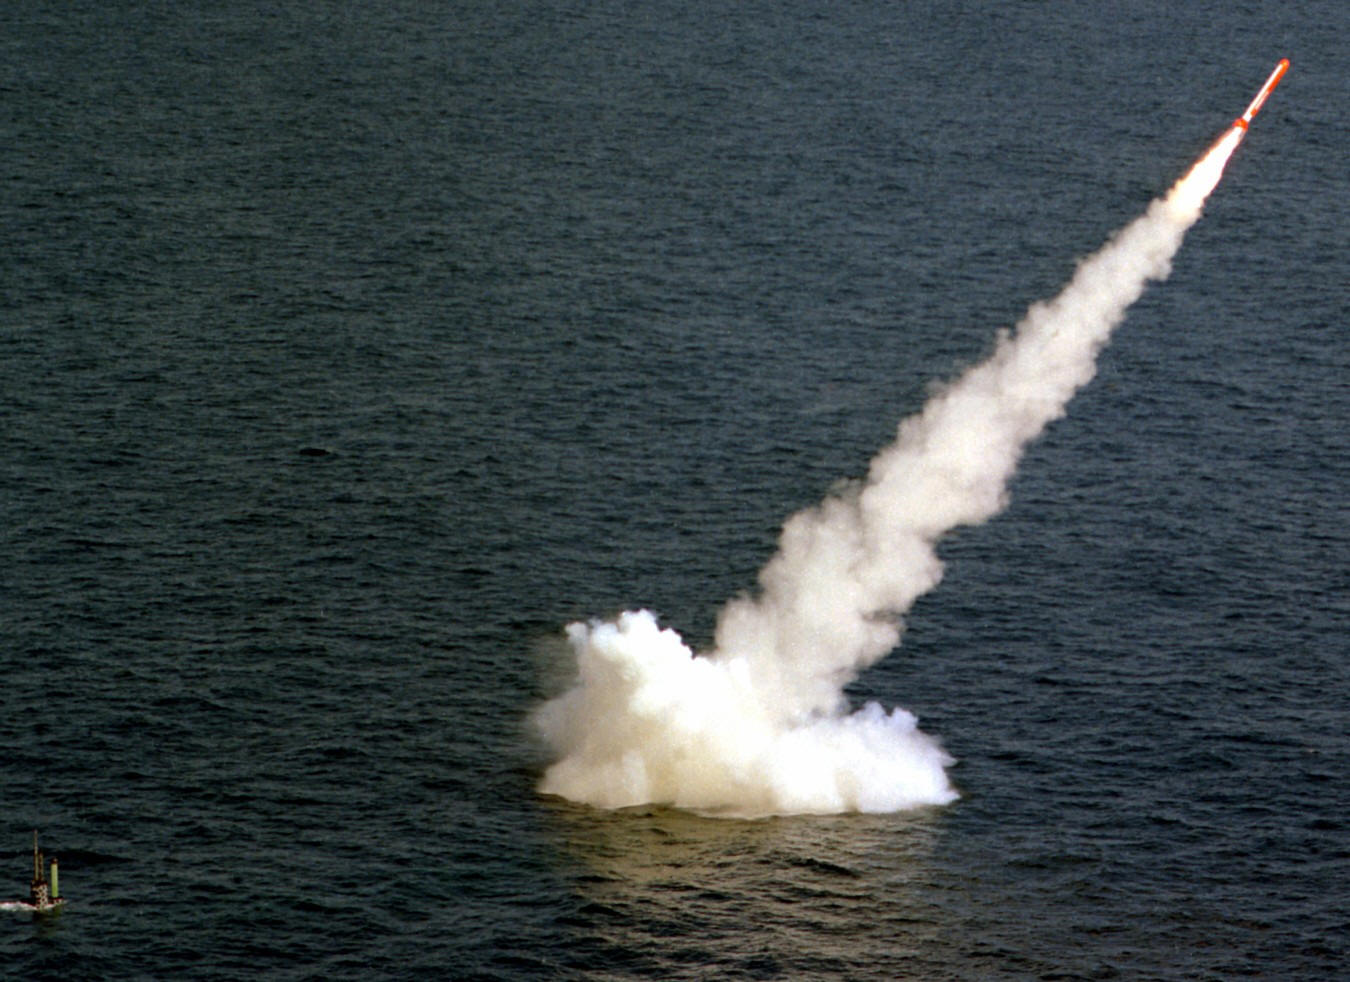 ssn-701 uss la jolla ugm-109 tomahawk tlam missile underwater launch